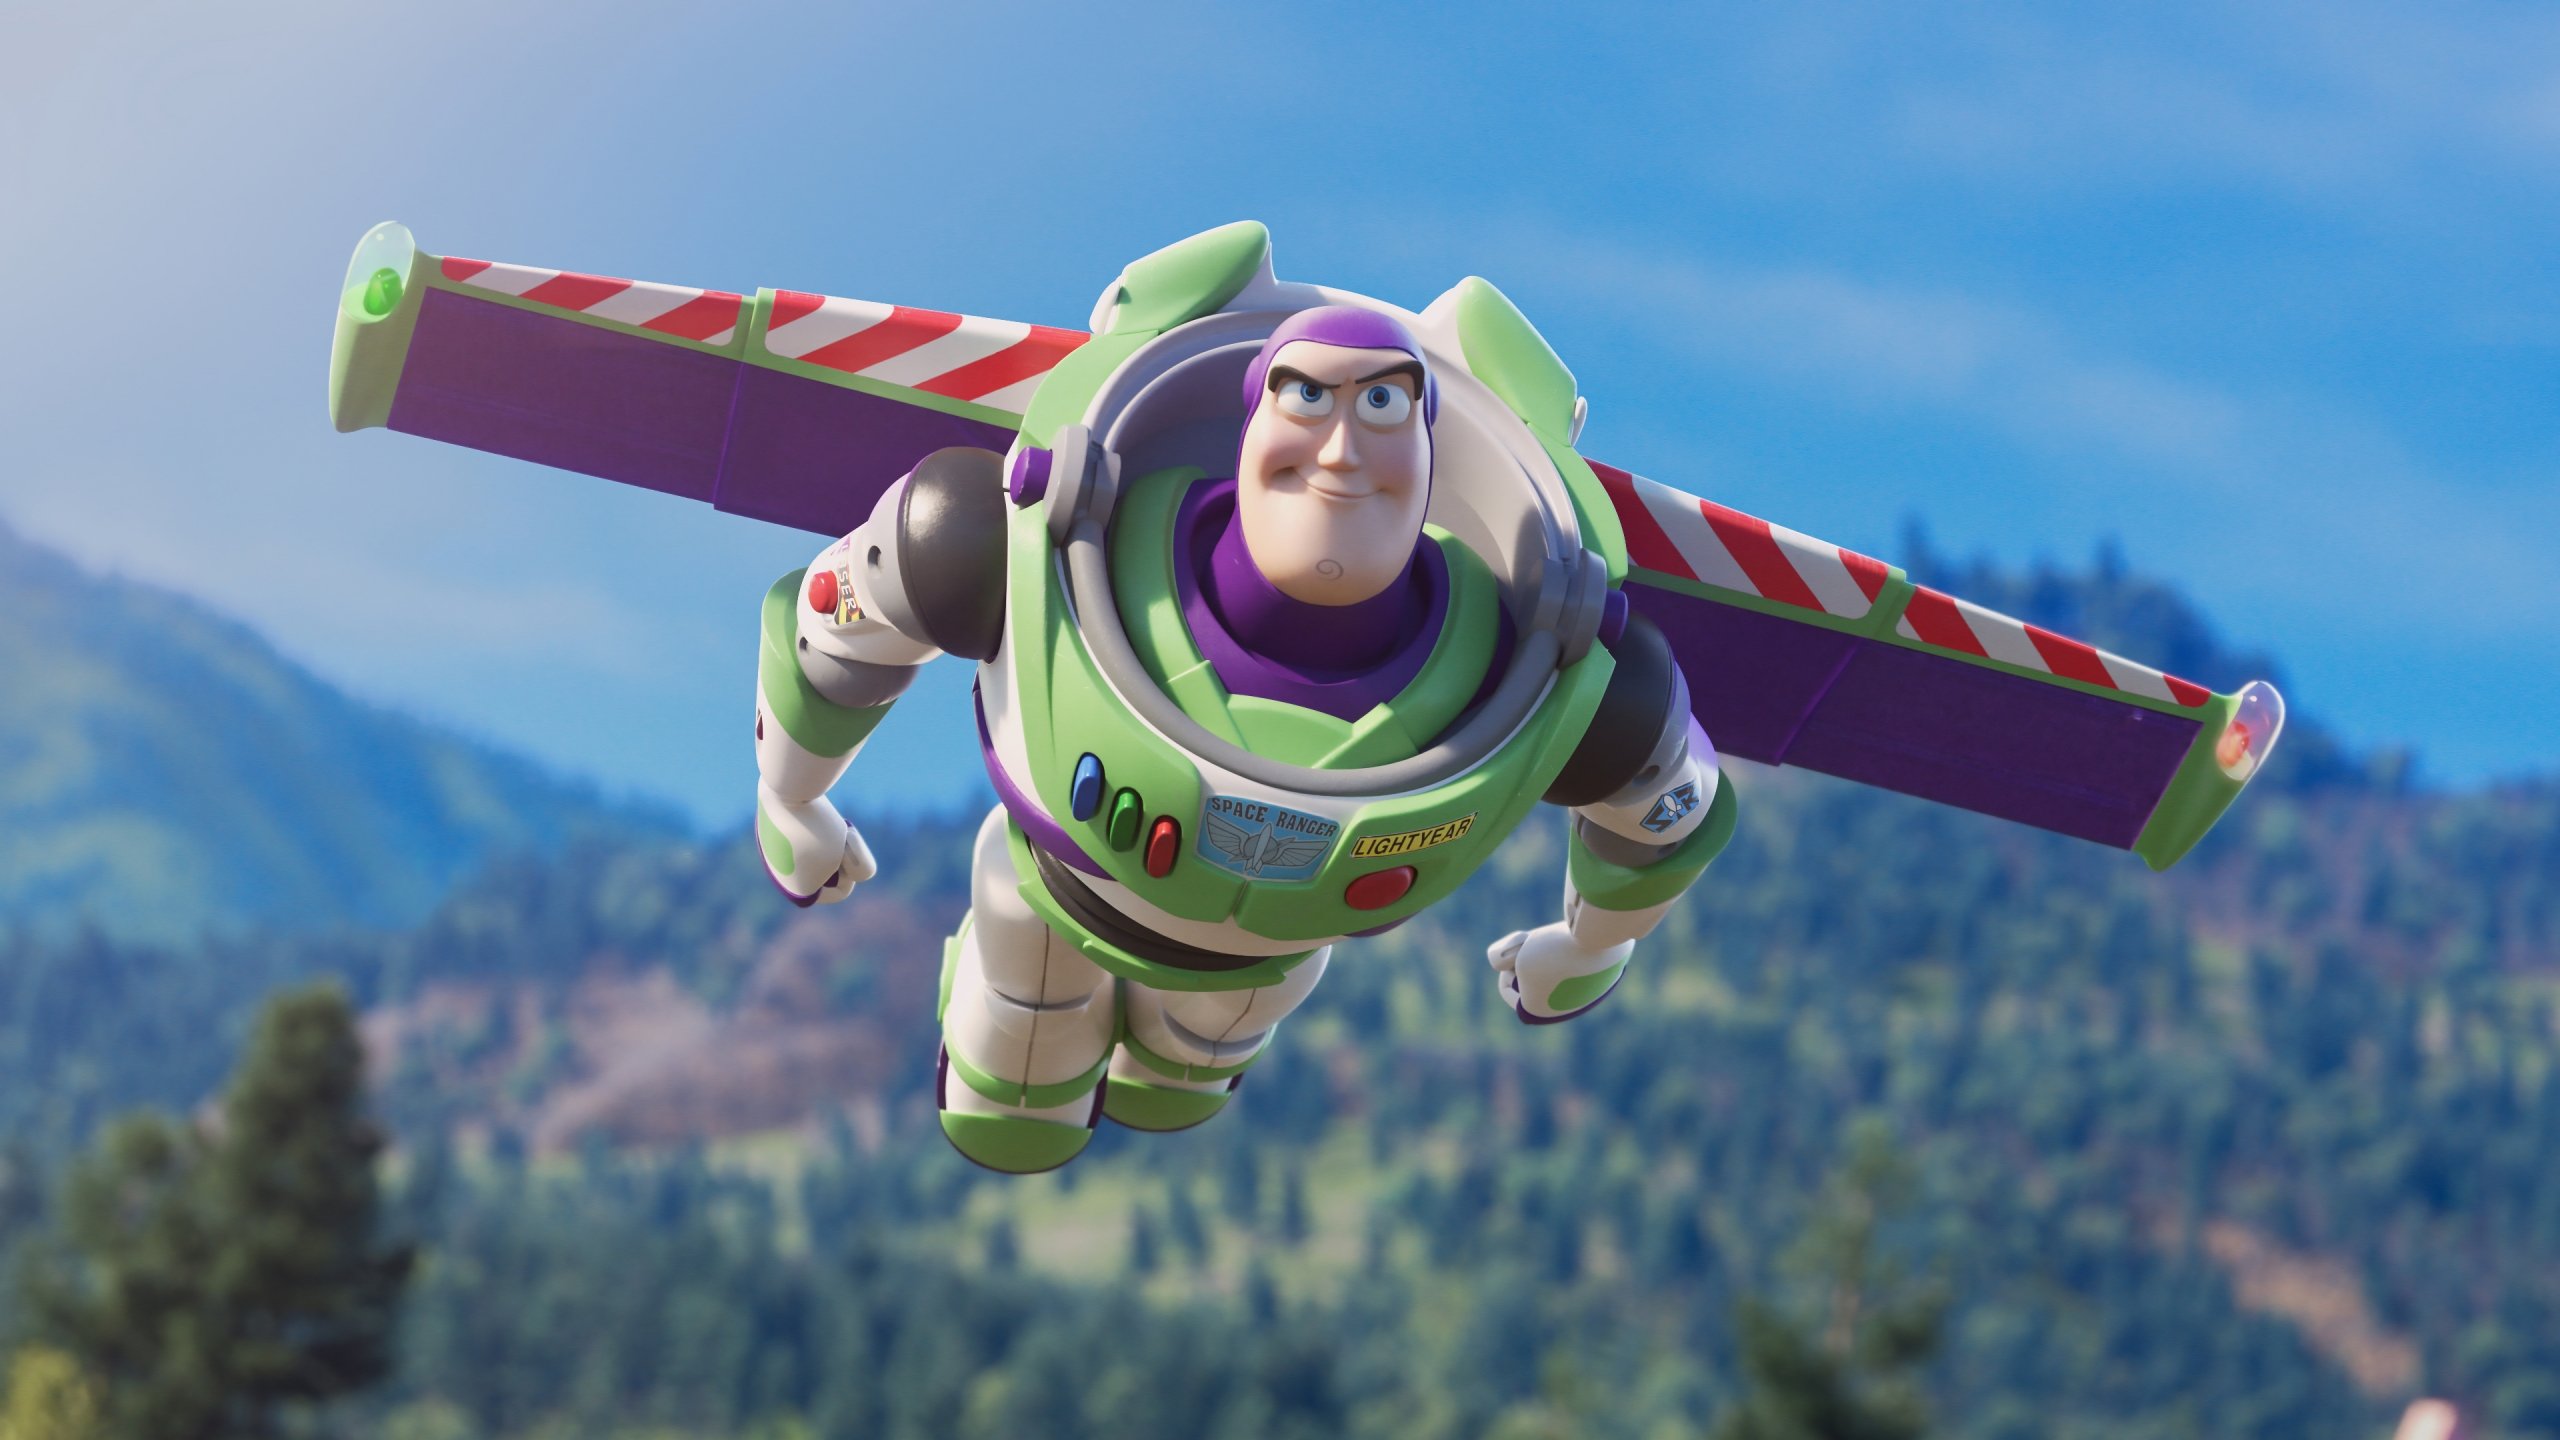 Buzz Lightyear flying Toy Story 4 